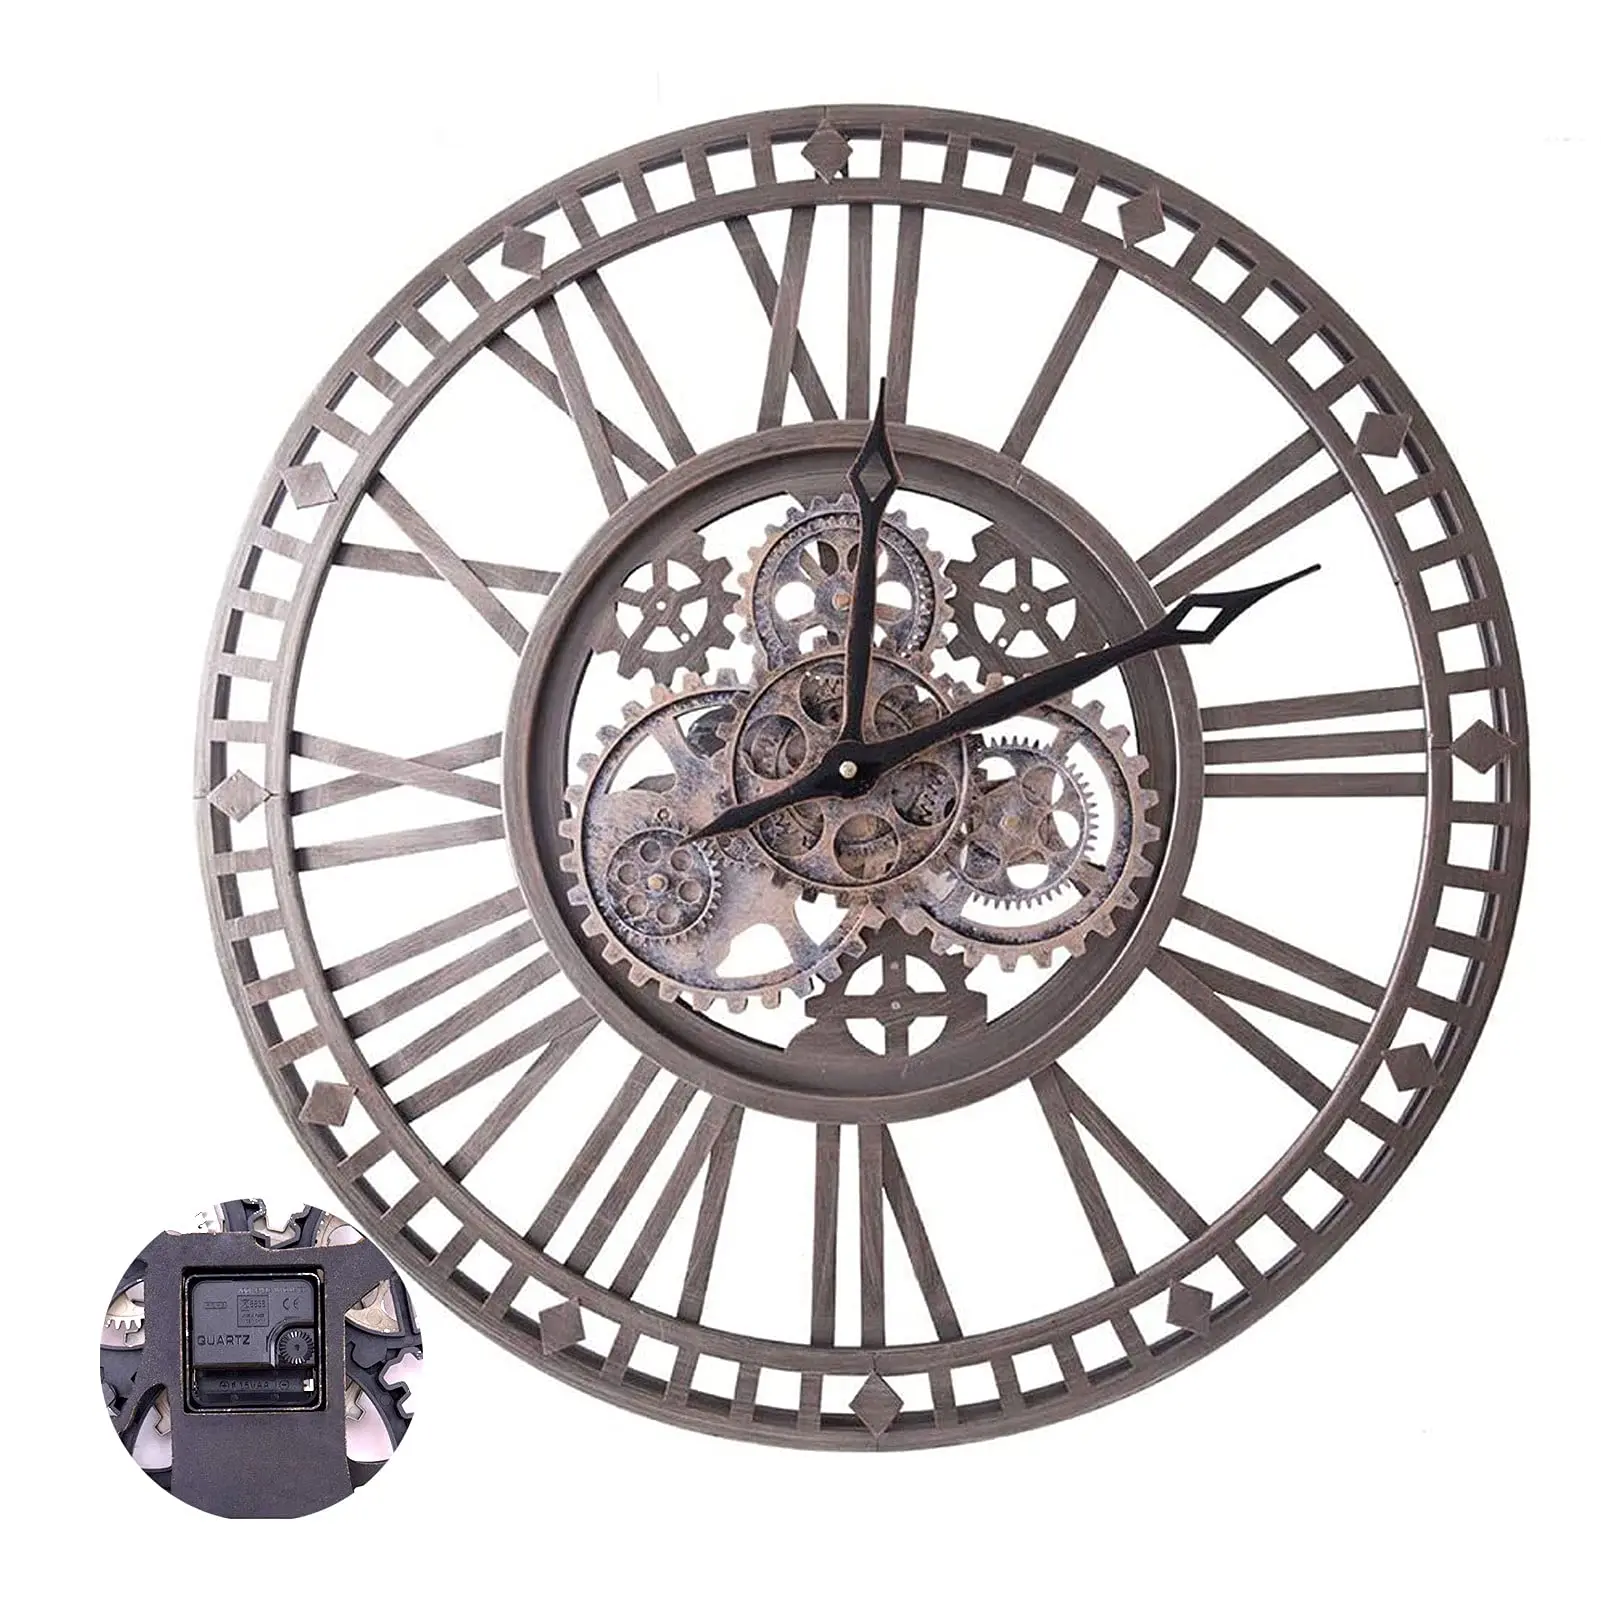 

24 Inch Large Farmhouse Wall Clock Mechanical Gear Wall Clock Retro with Roman Numeral Silent Vintage Nostalgi Clock Room Decor